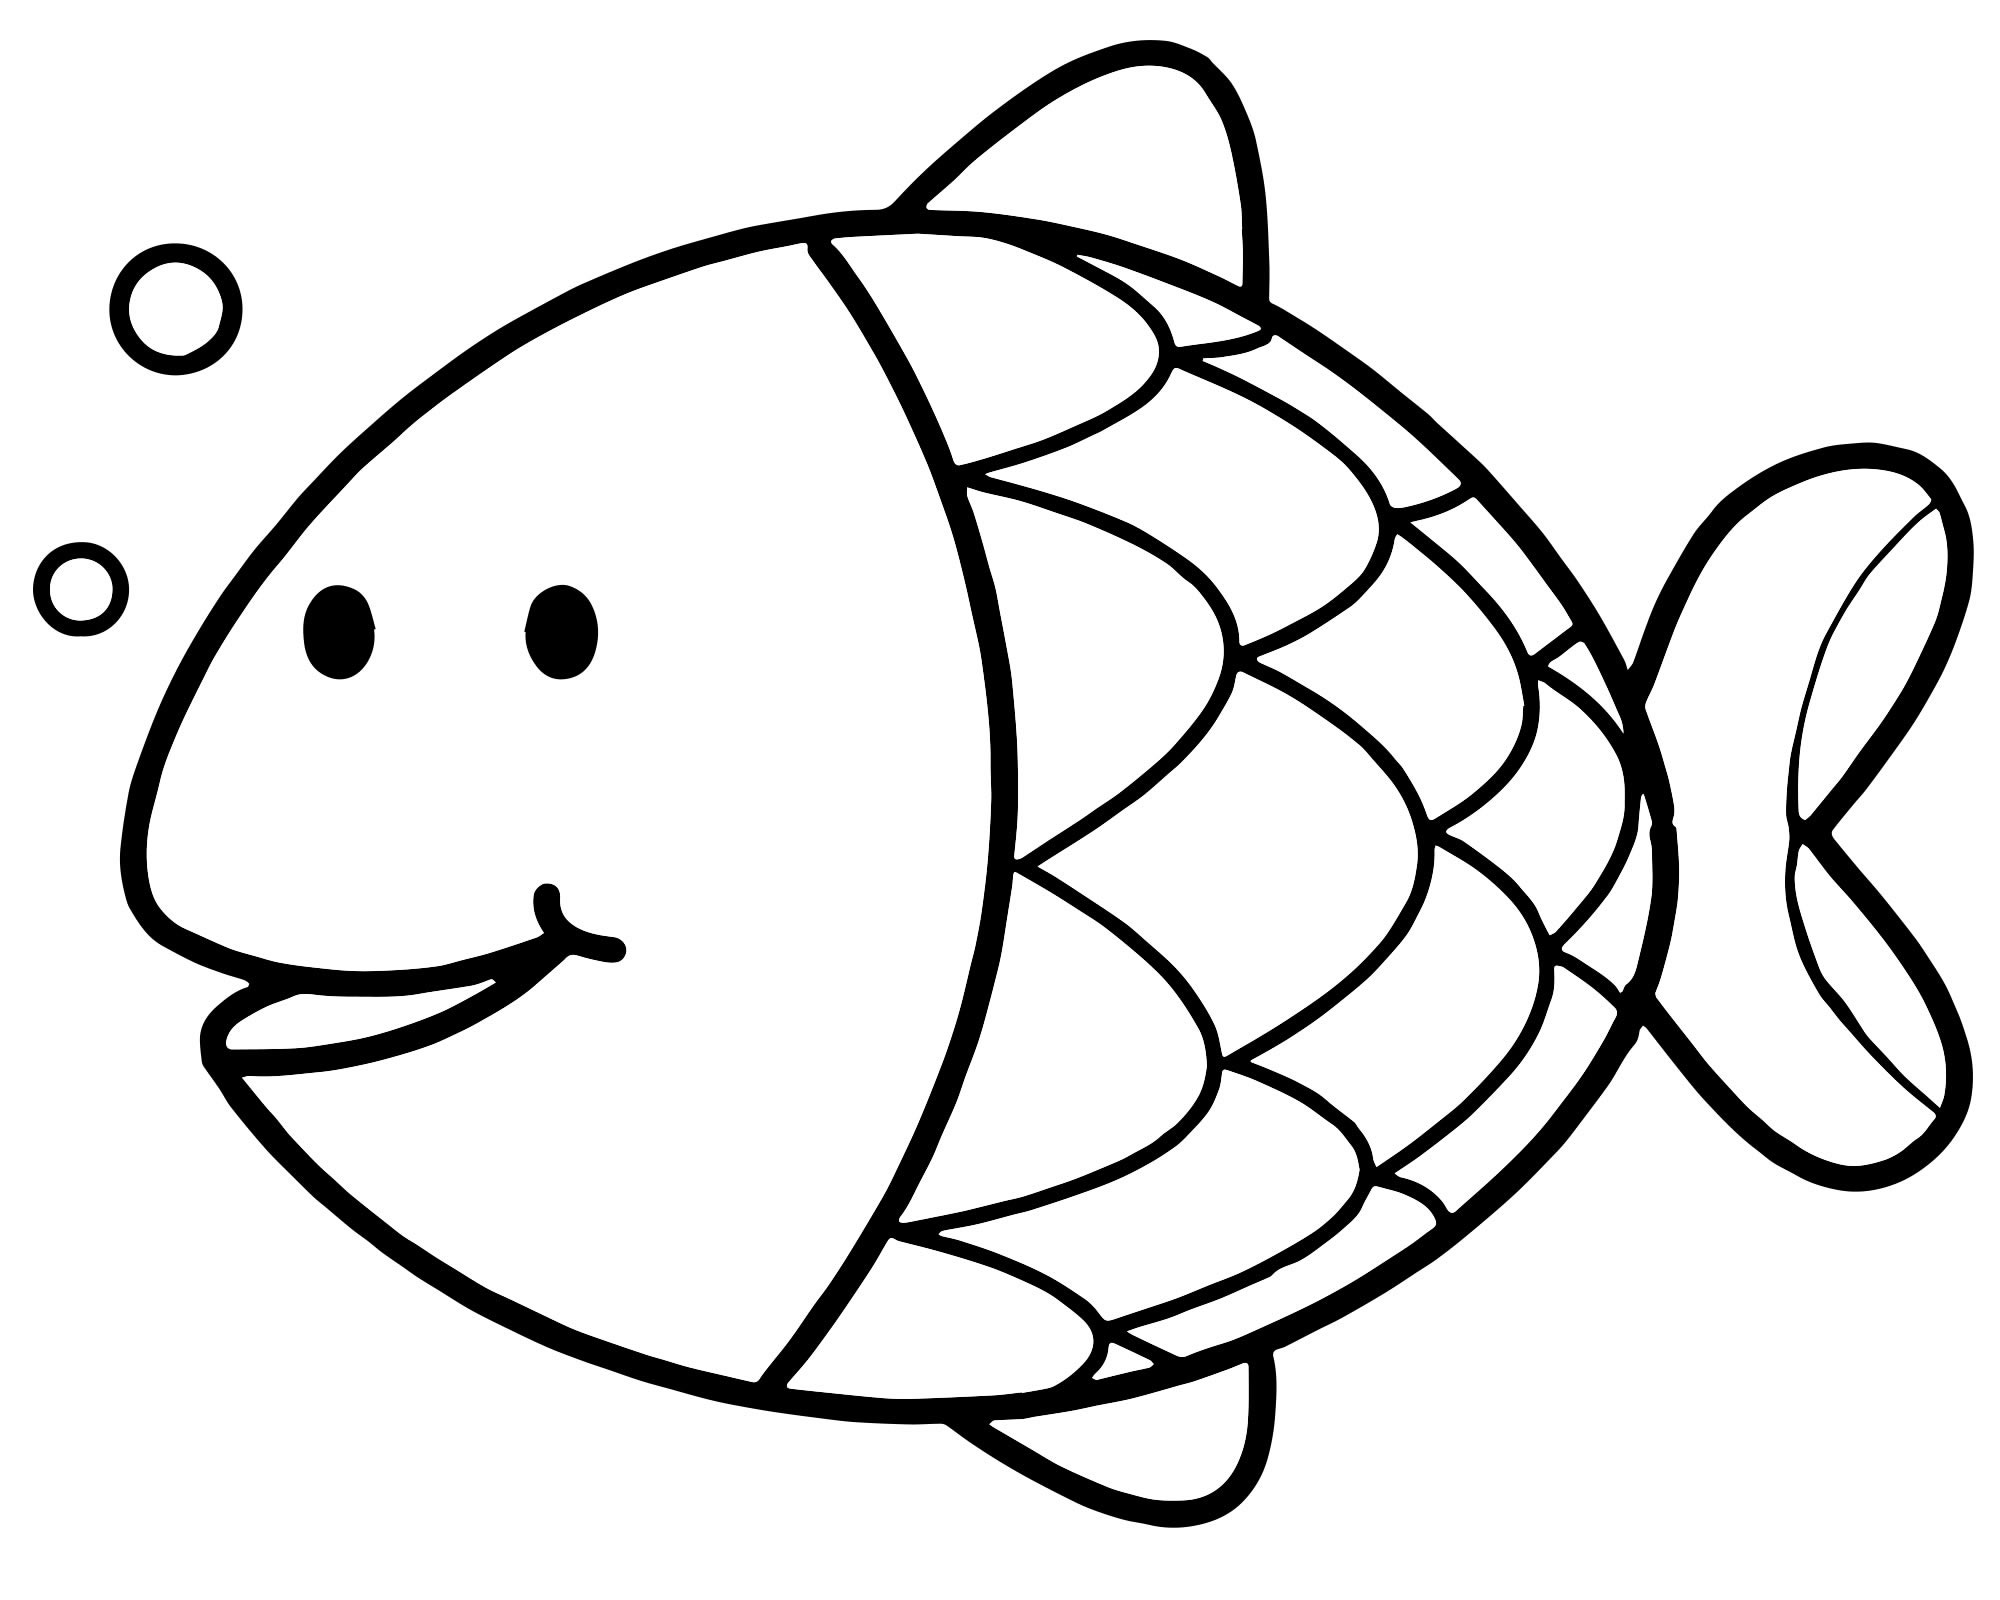 Dibujo pez simple